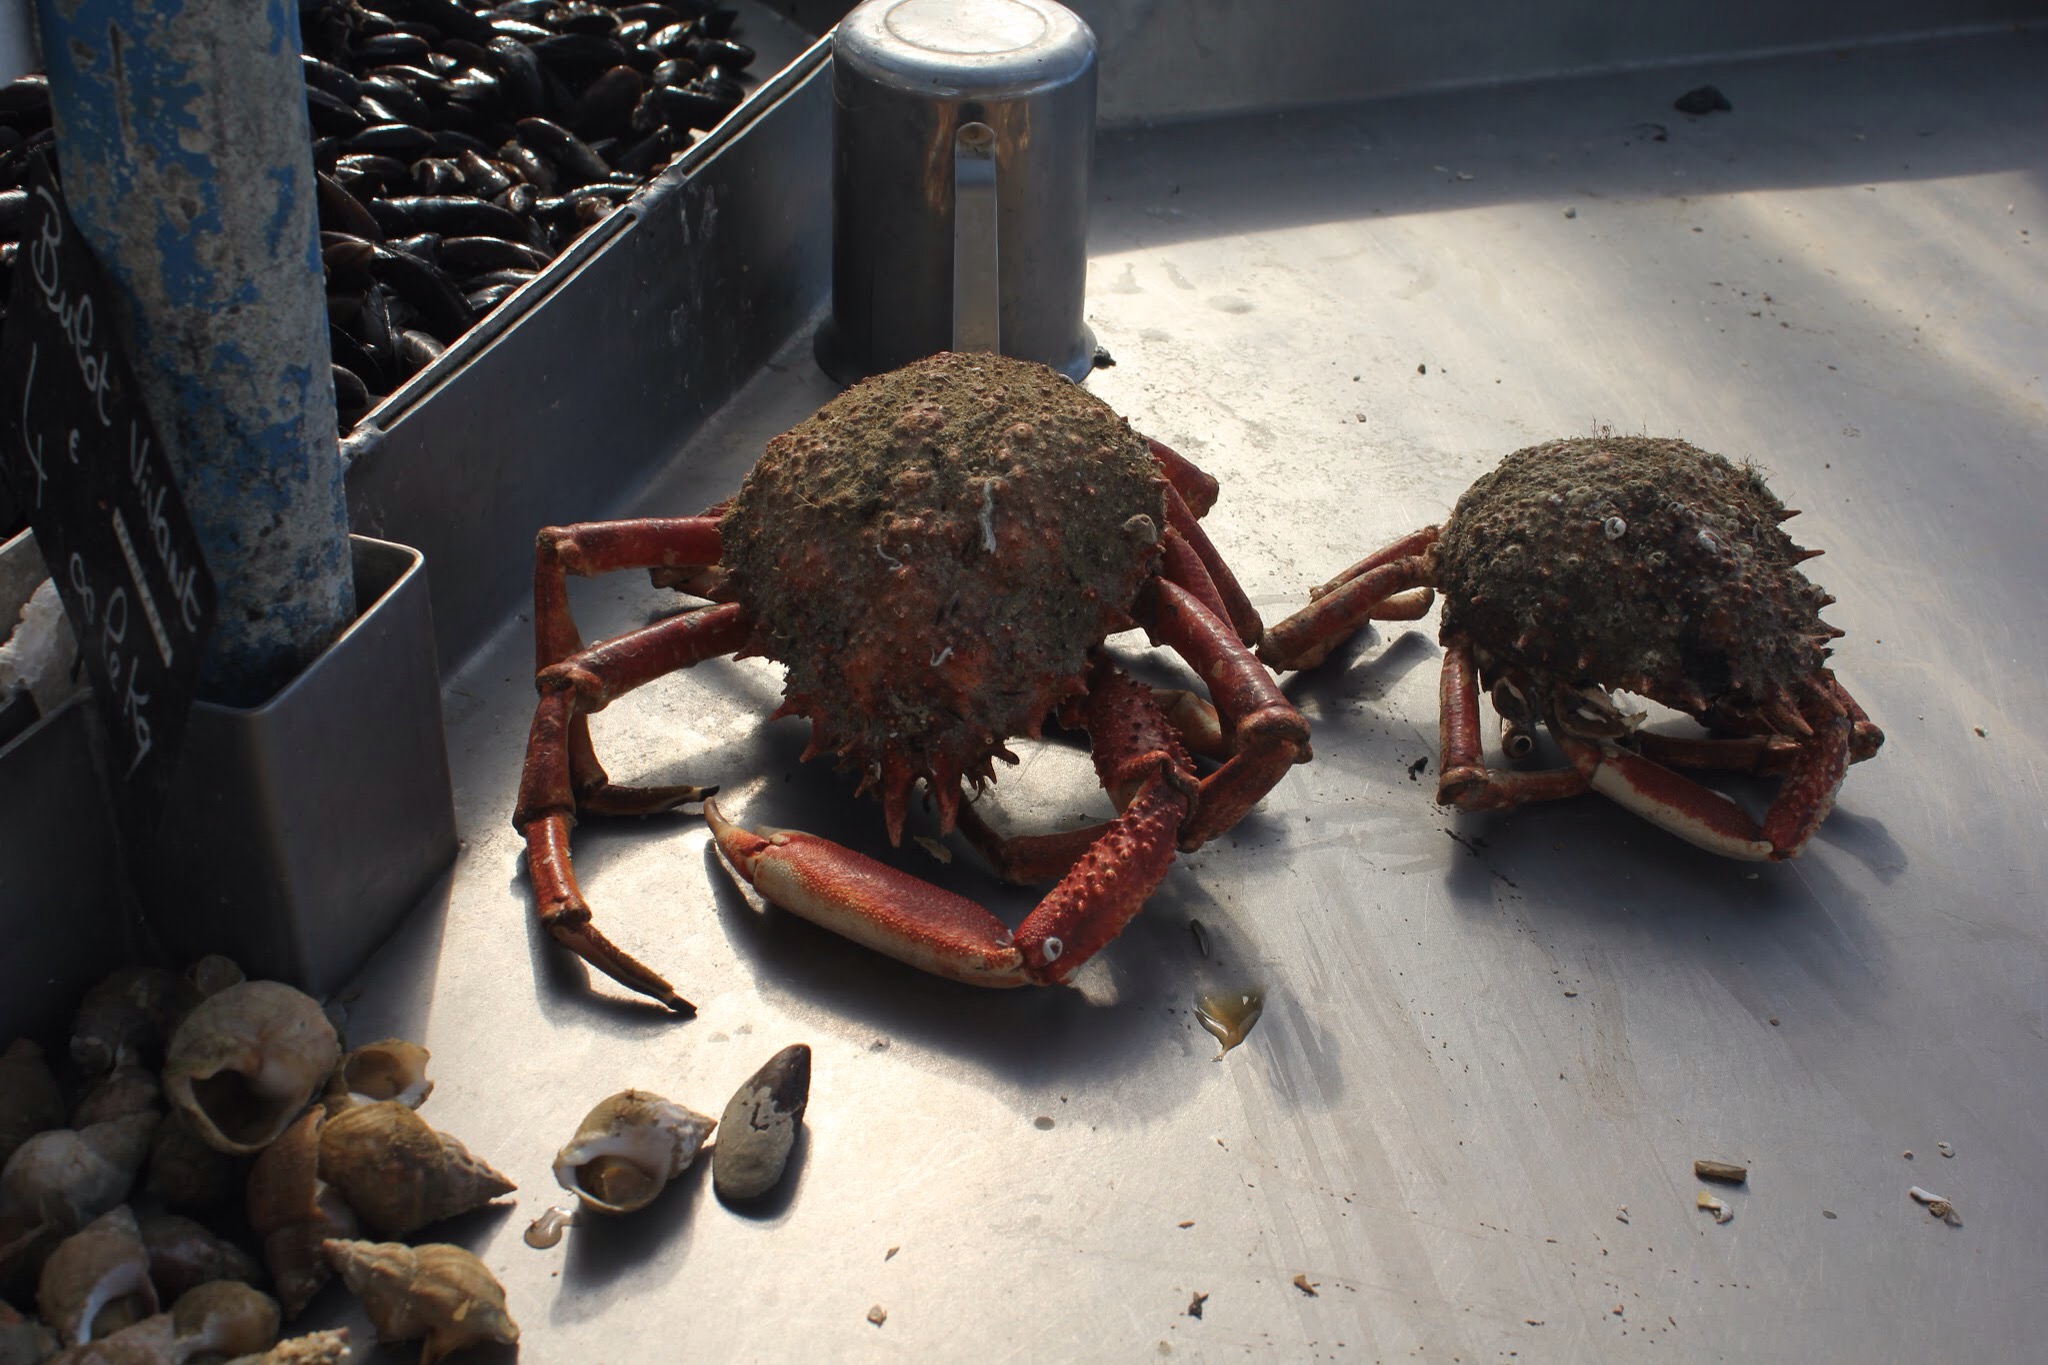 Crabs at courseulles sur mer fish market